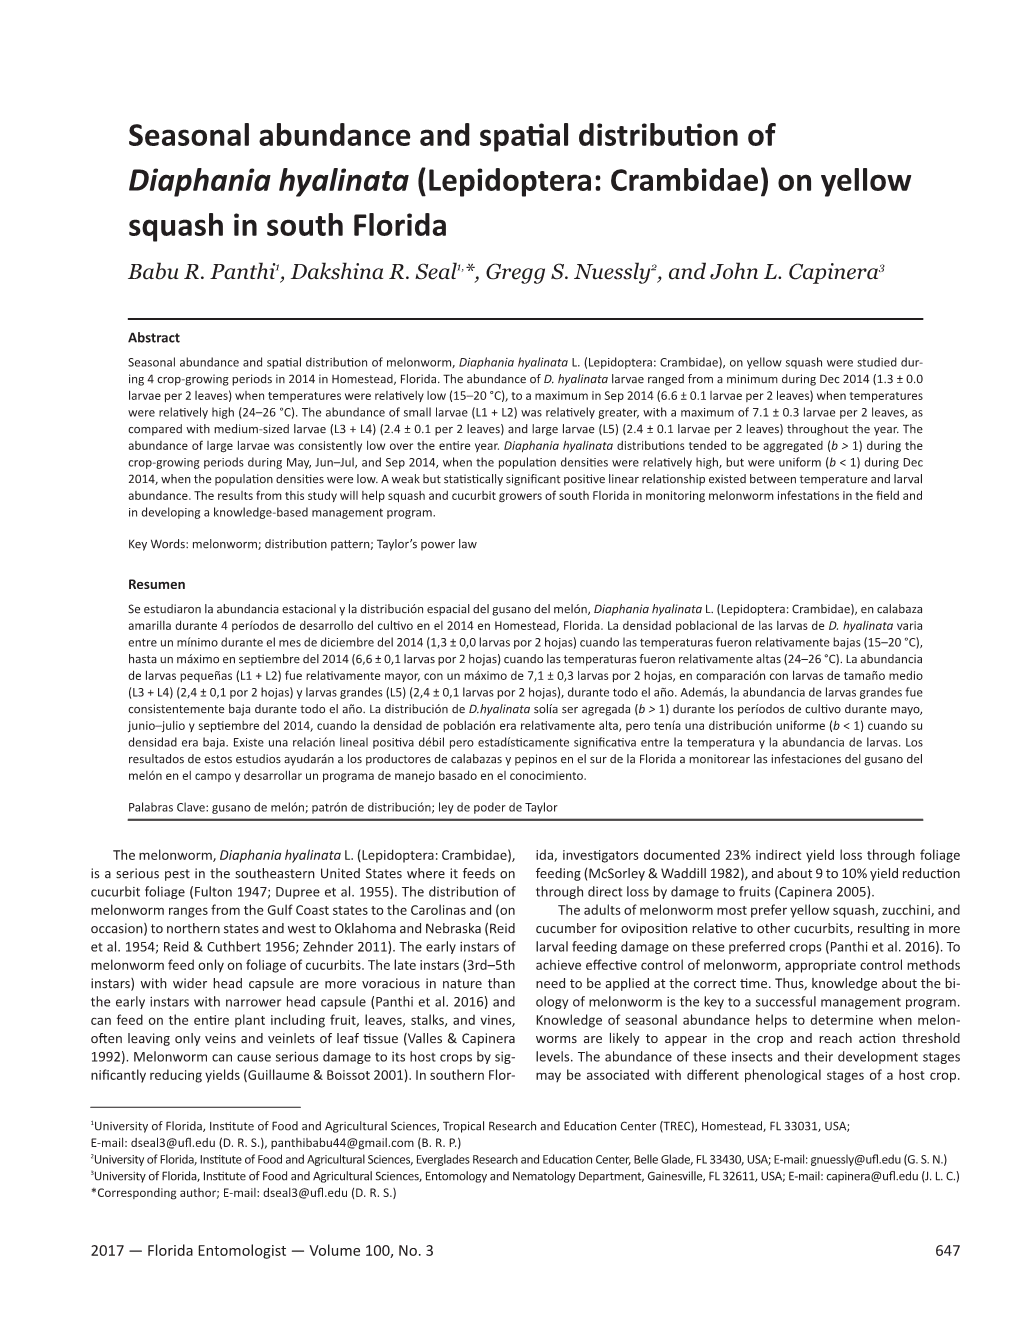 Seasonal Abundance and Spatial Distribution of Diaphania Hyalinata (Lepidoptera: Crambidae) on Yellow Squash in South Florida